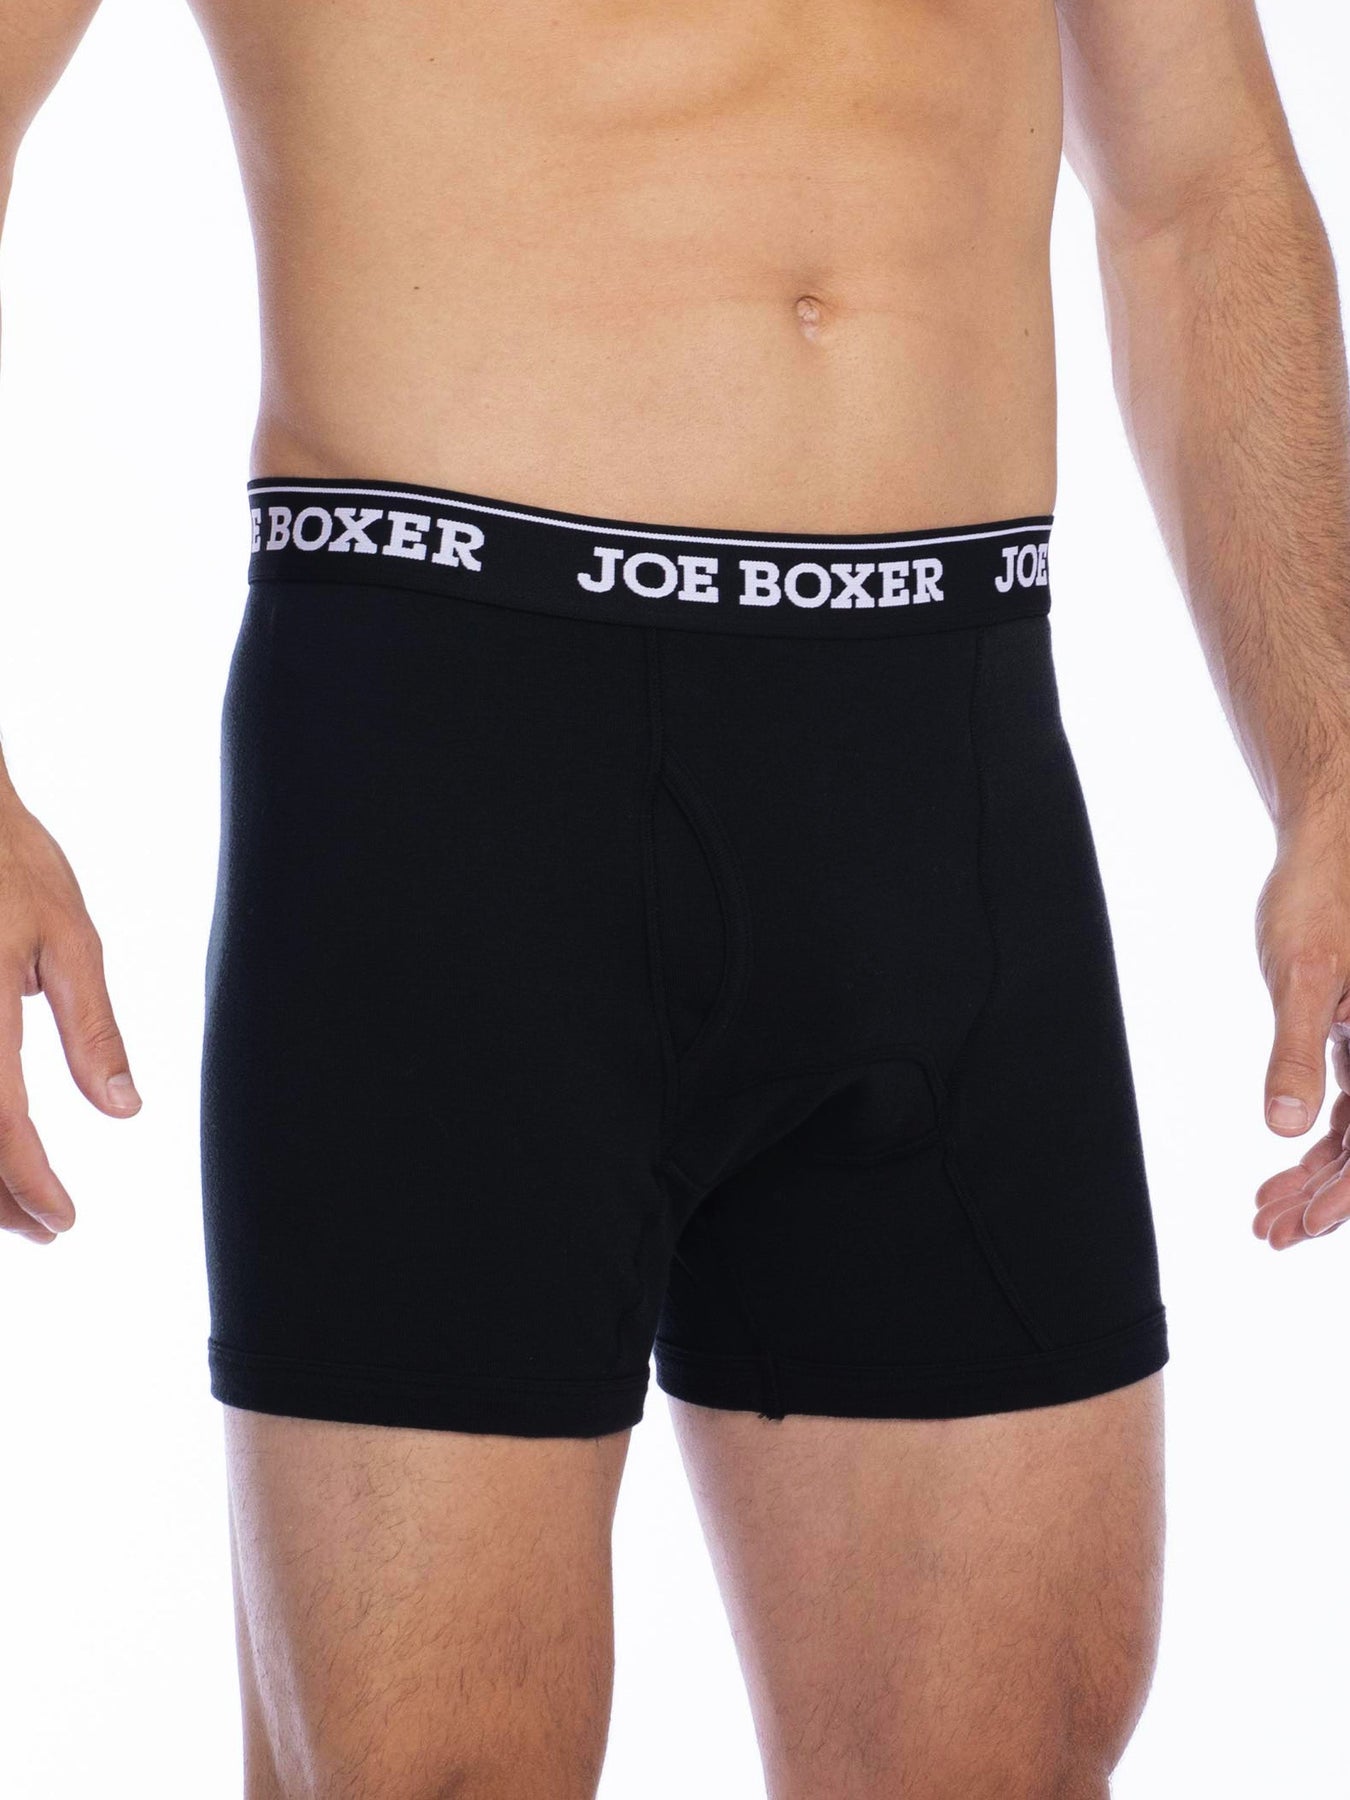 Layer 8 Mens Cotton Stretch 3 Pack Boxer Briefs Size Small 28-30 Black  Underwear